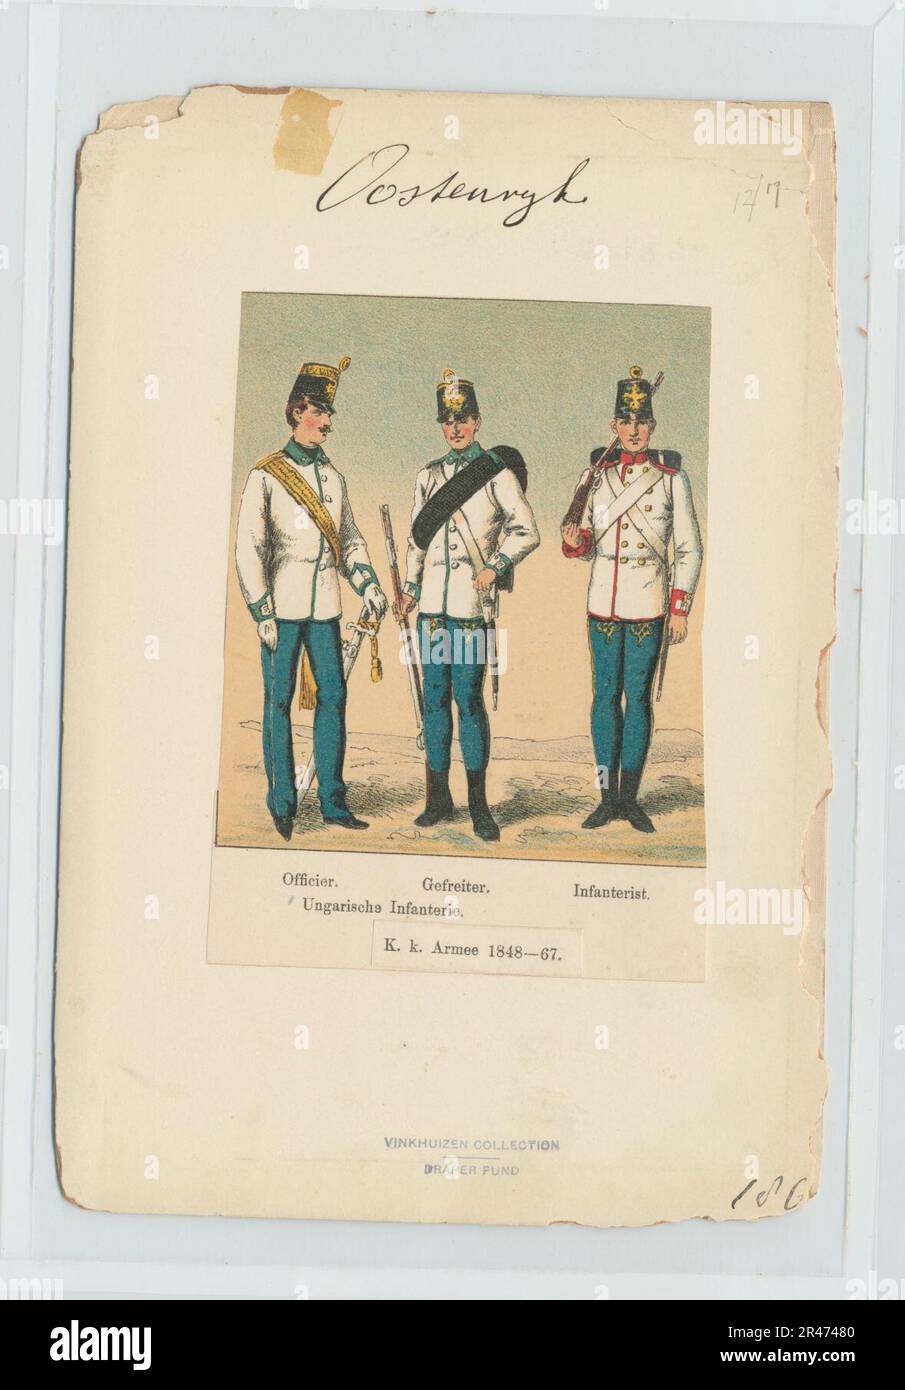 Ungarische Finfanterie- Officier, Gefreiter, Infanterist. K.K. Armee 1848-67 Foto Stock